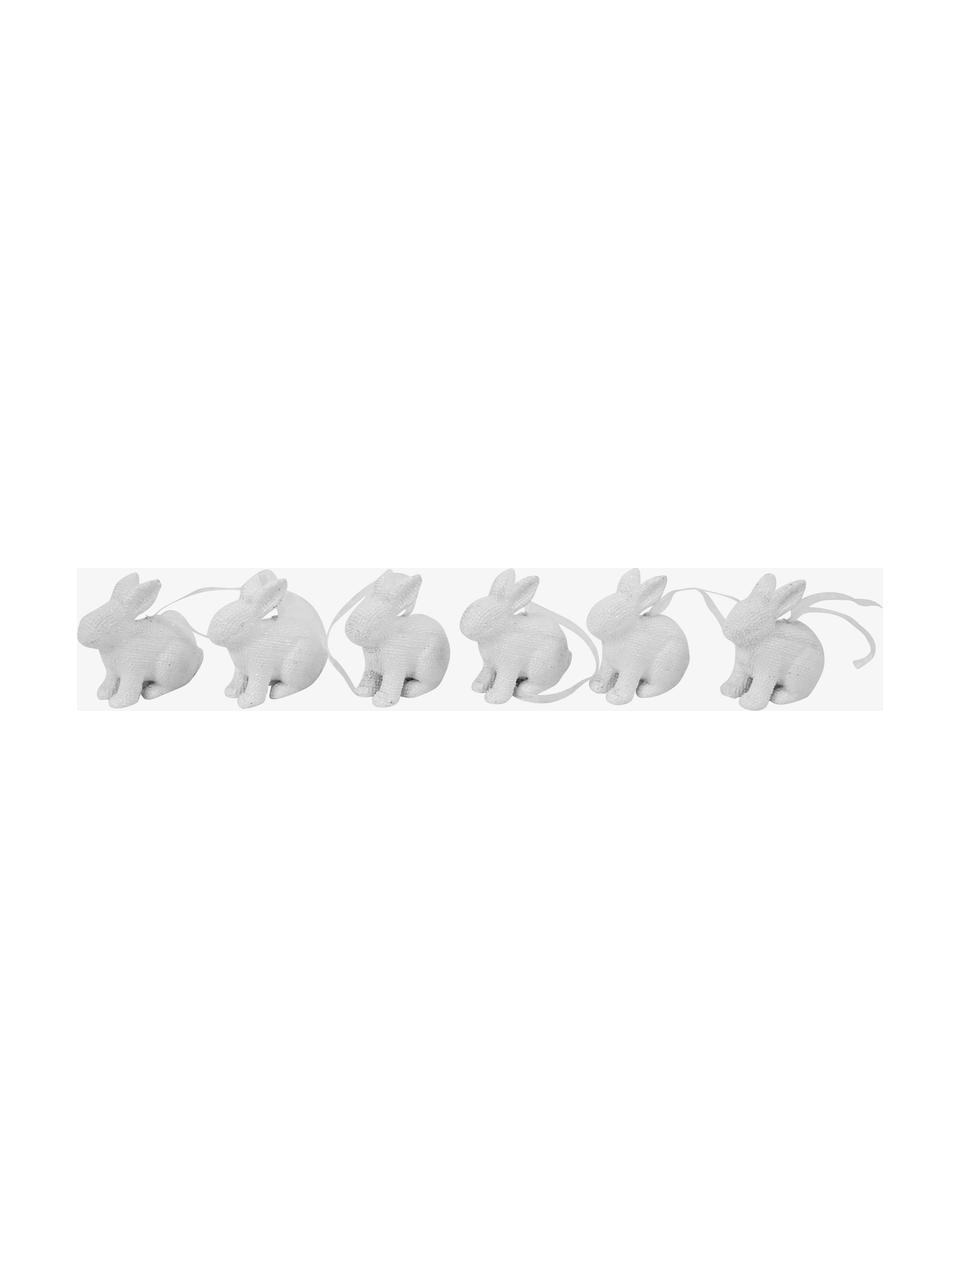 Mini-Osterhasen Pailletti, 6 Stück, Resin, Weiß, glitzernd, B 5 x H 6 cm